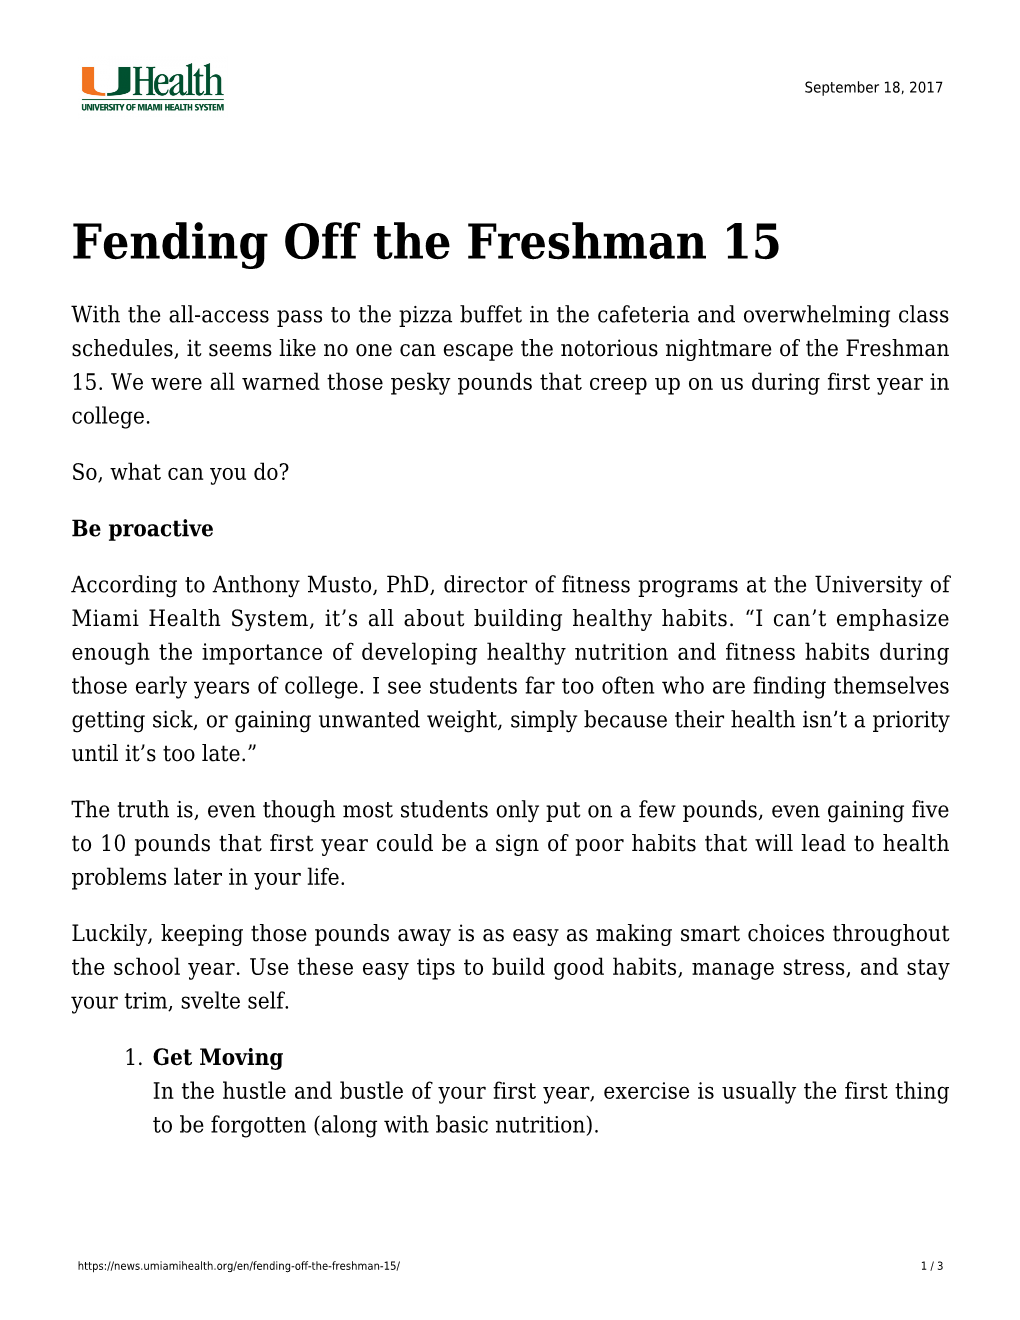 Fending Off the Freshman 15